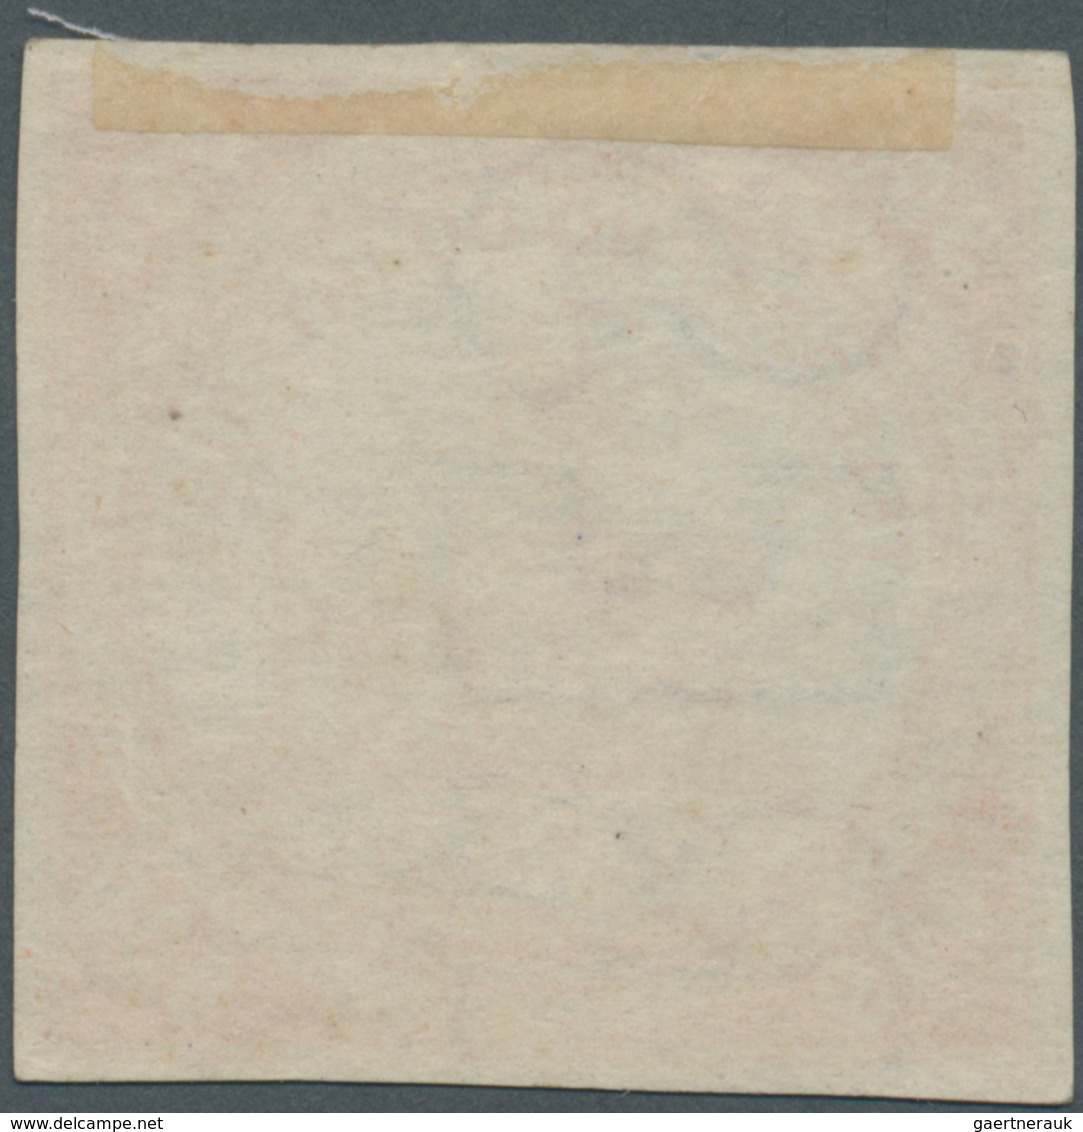 00587 Brasilien - Telegrafenmarken: 1873, 500r. Vermilion, Wm "Lacroix Freres", Fresh Colour, Full Margins - Telegraphenmarken